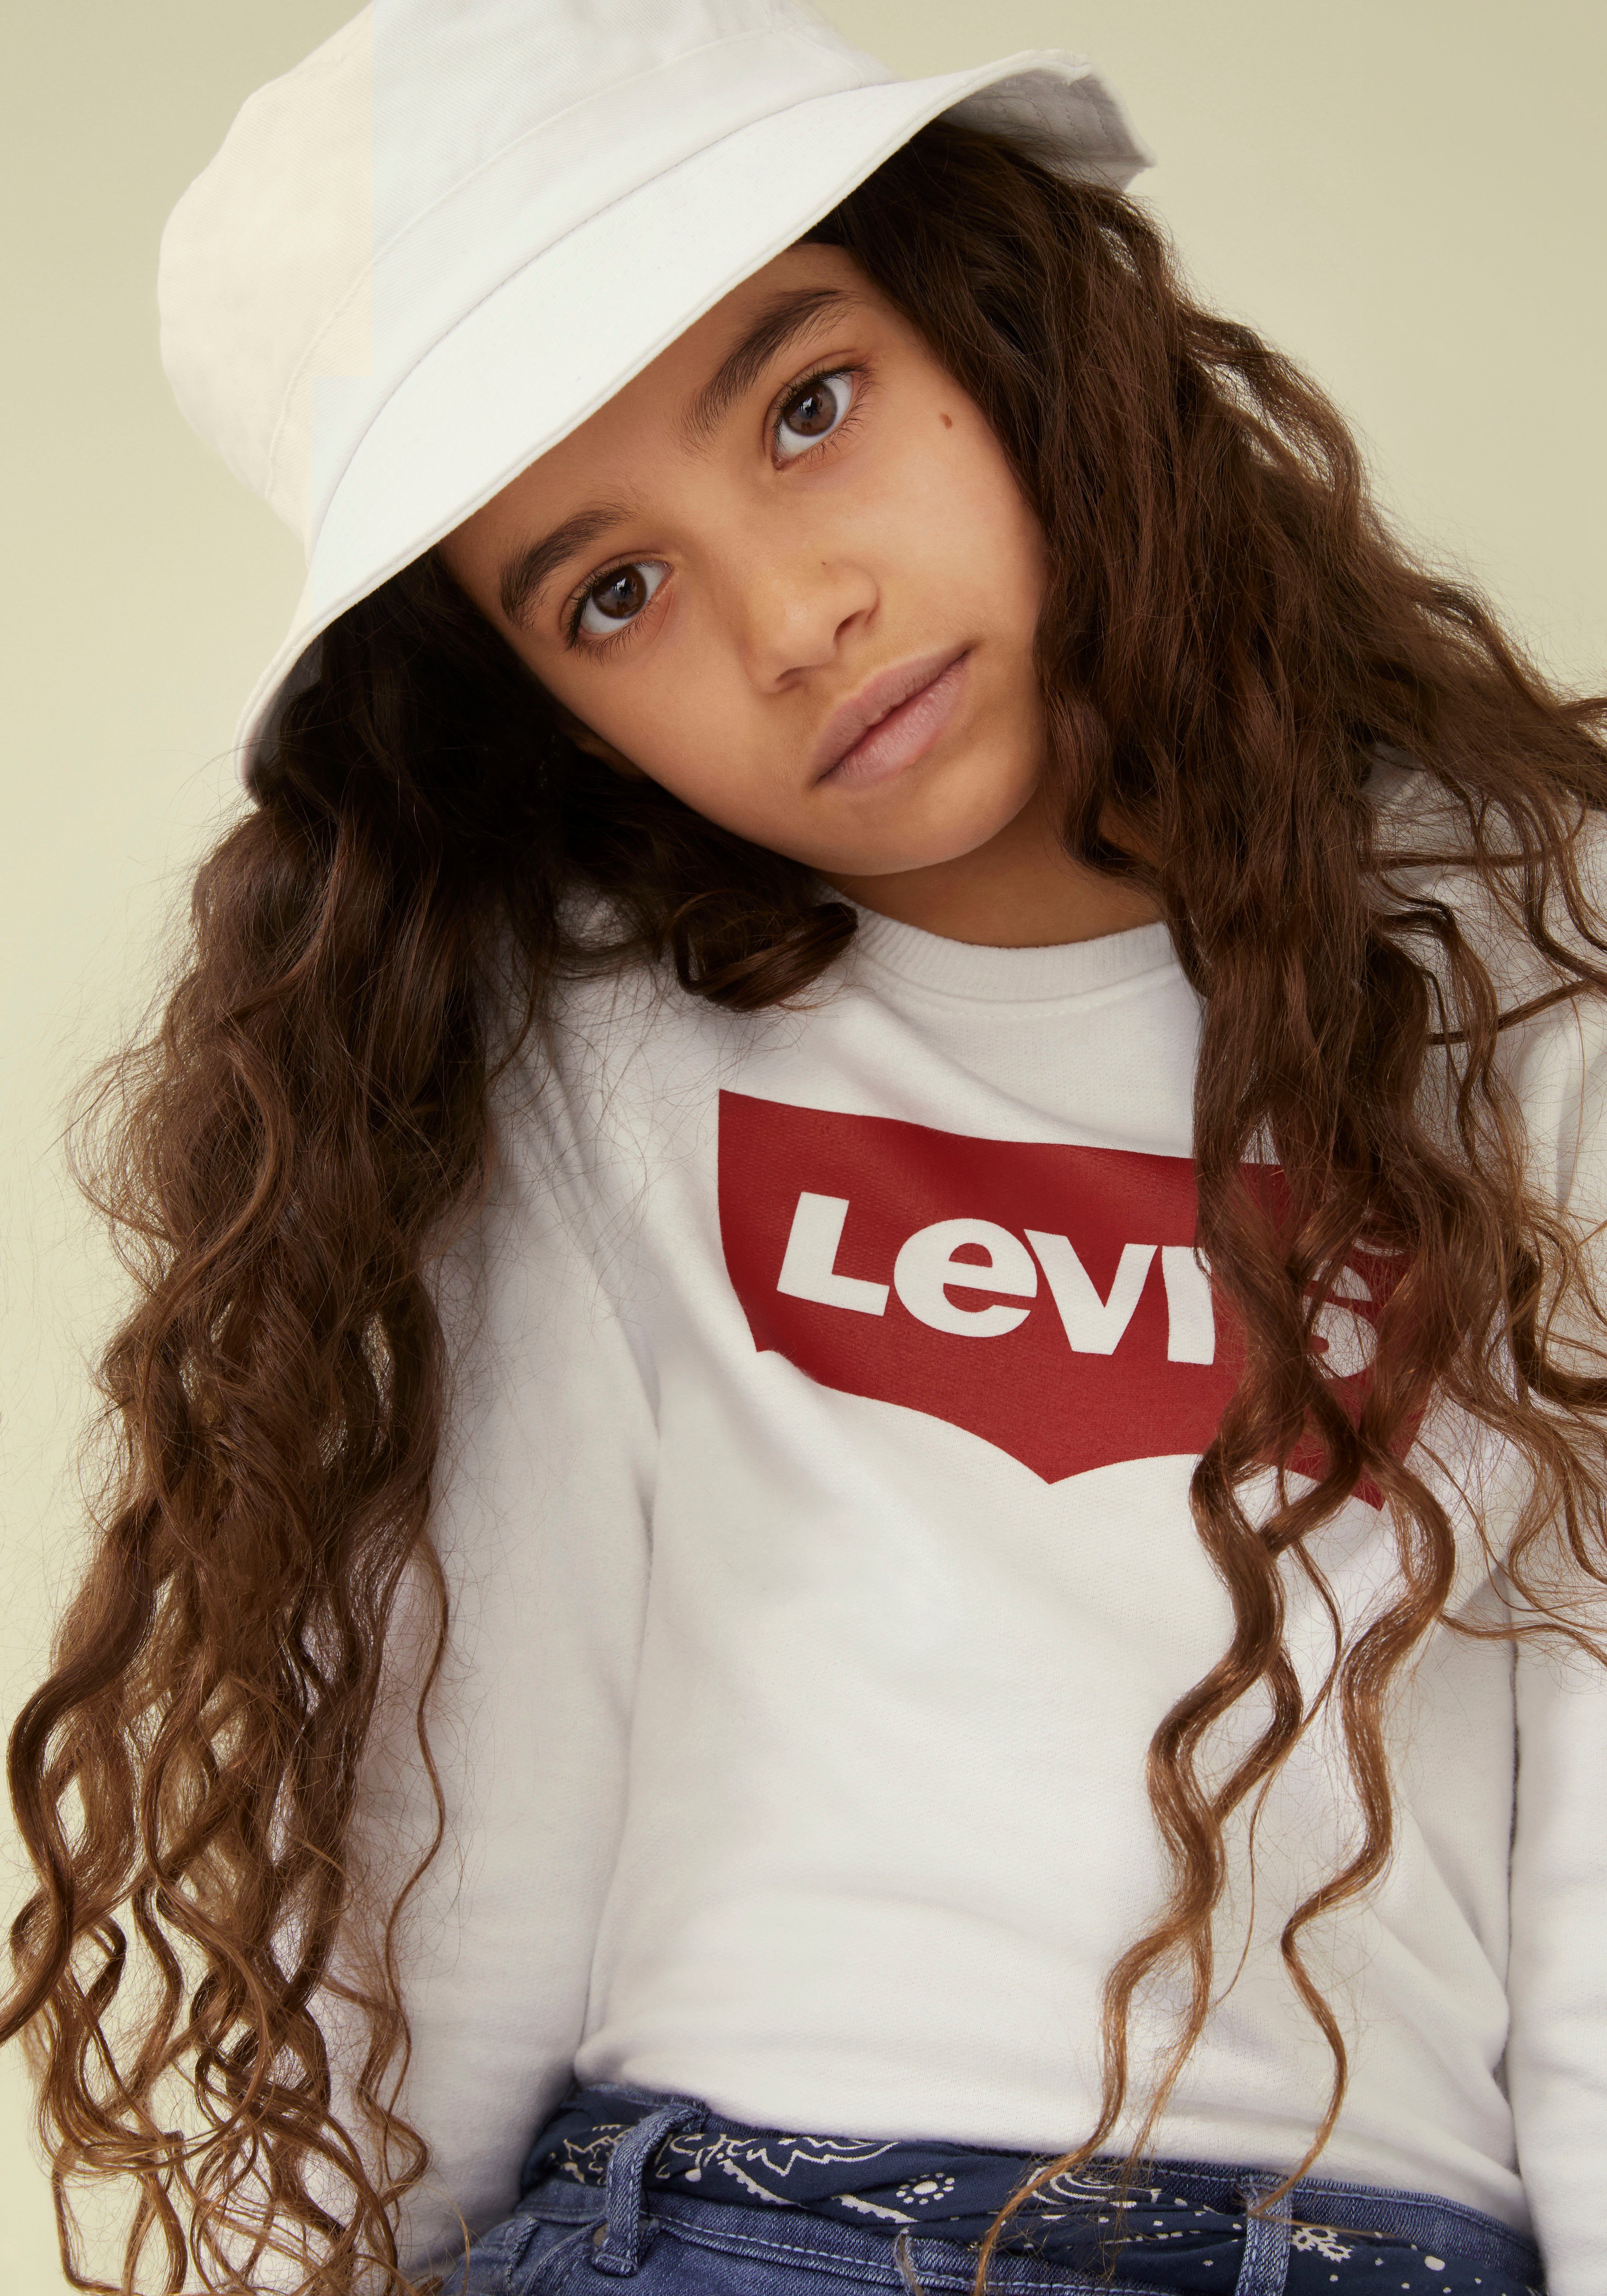 Levi's® Kids Sweatshirt BATWING weiß SWEATSHIRT GIRLS CREWNECK for